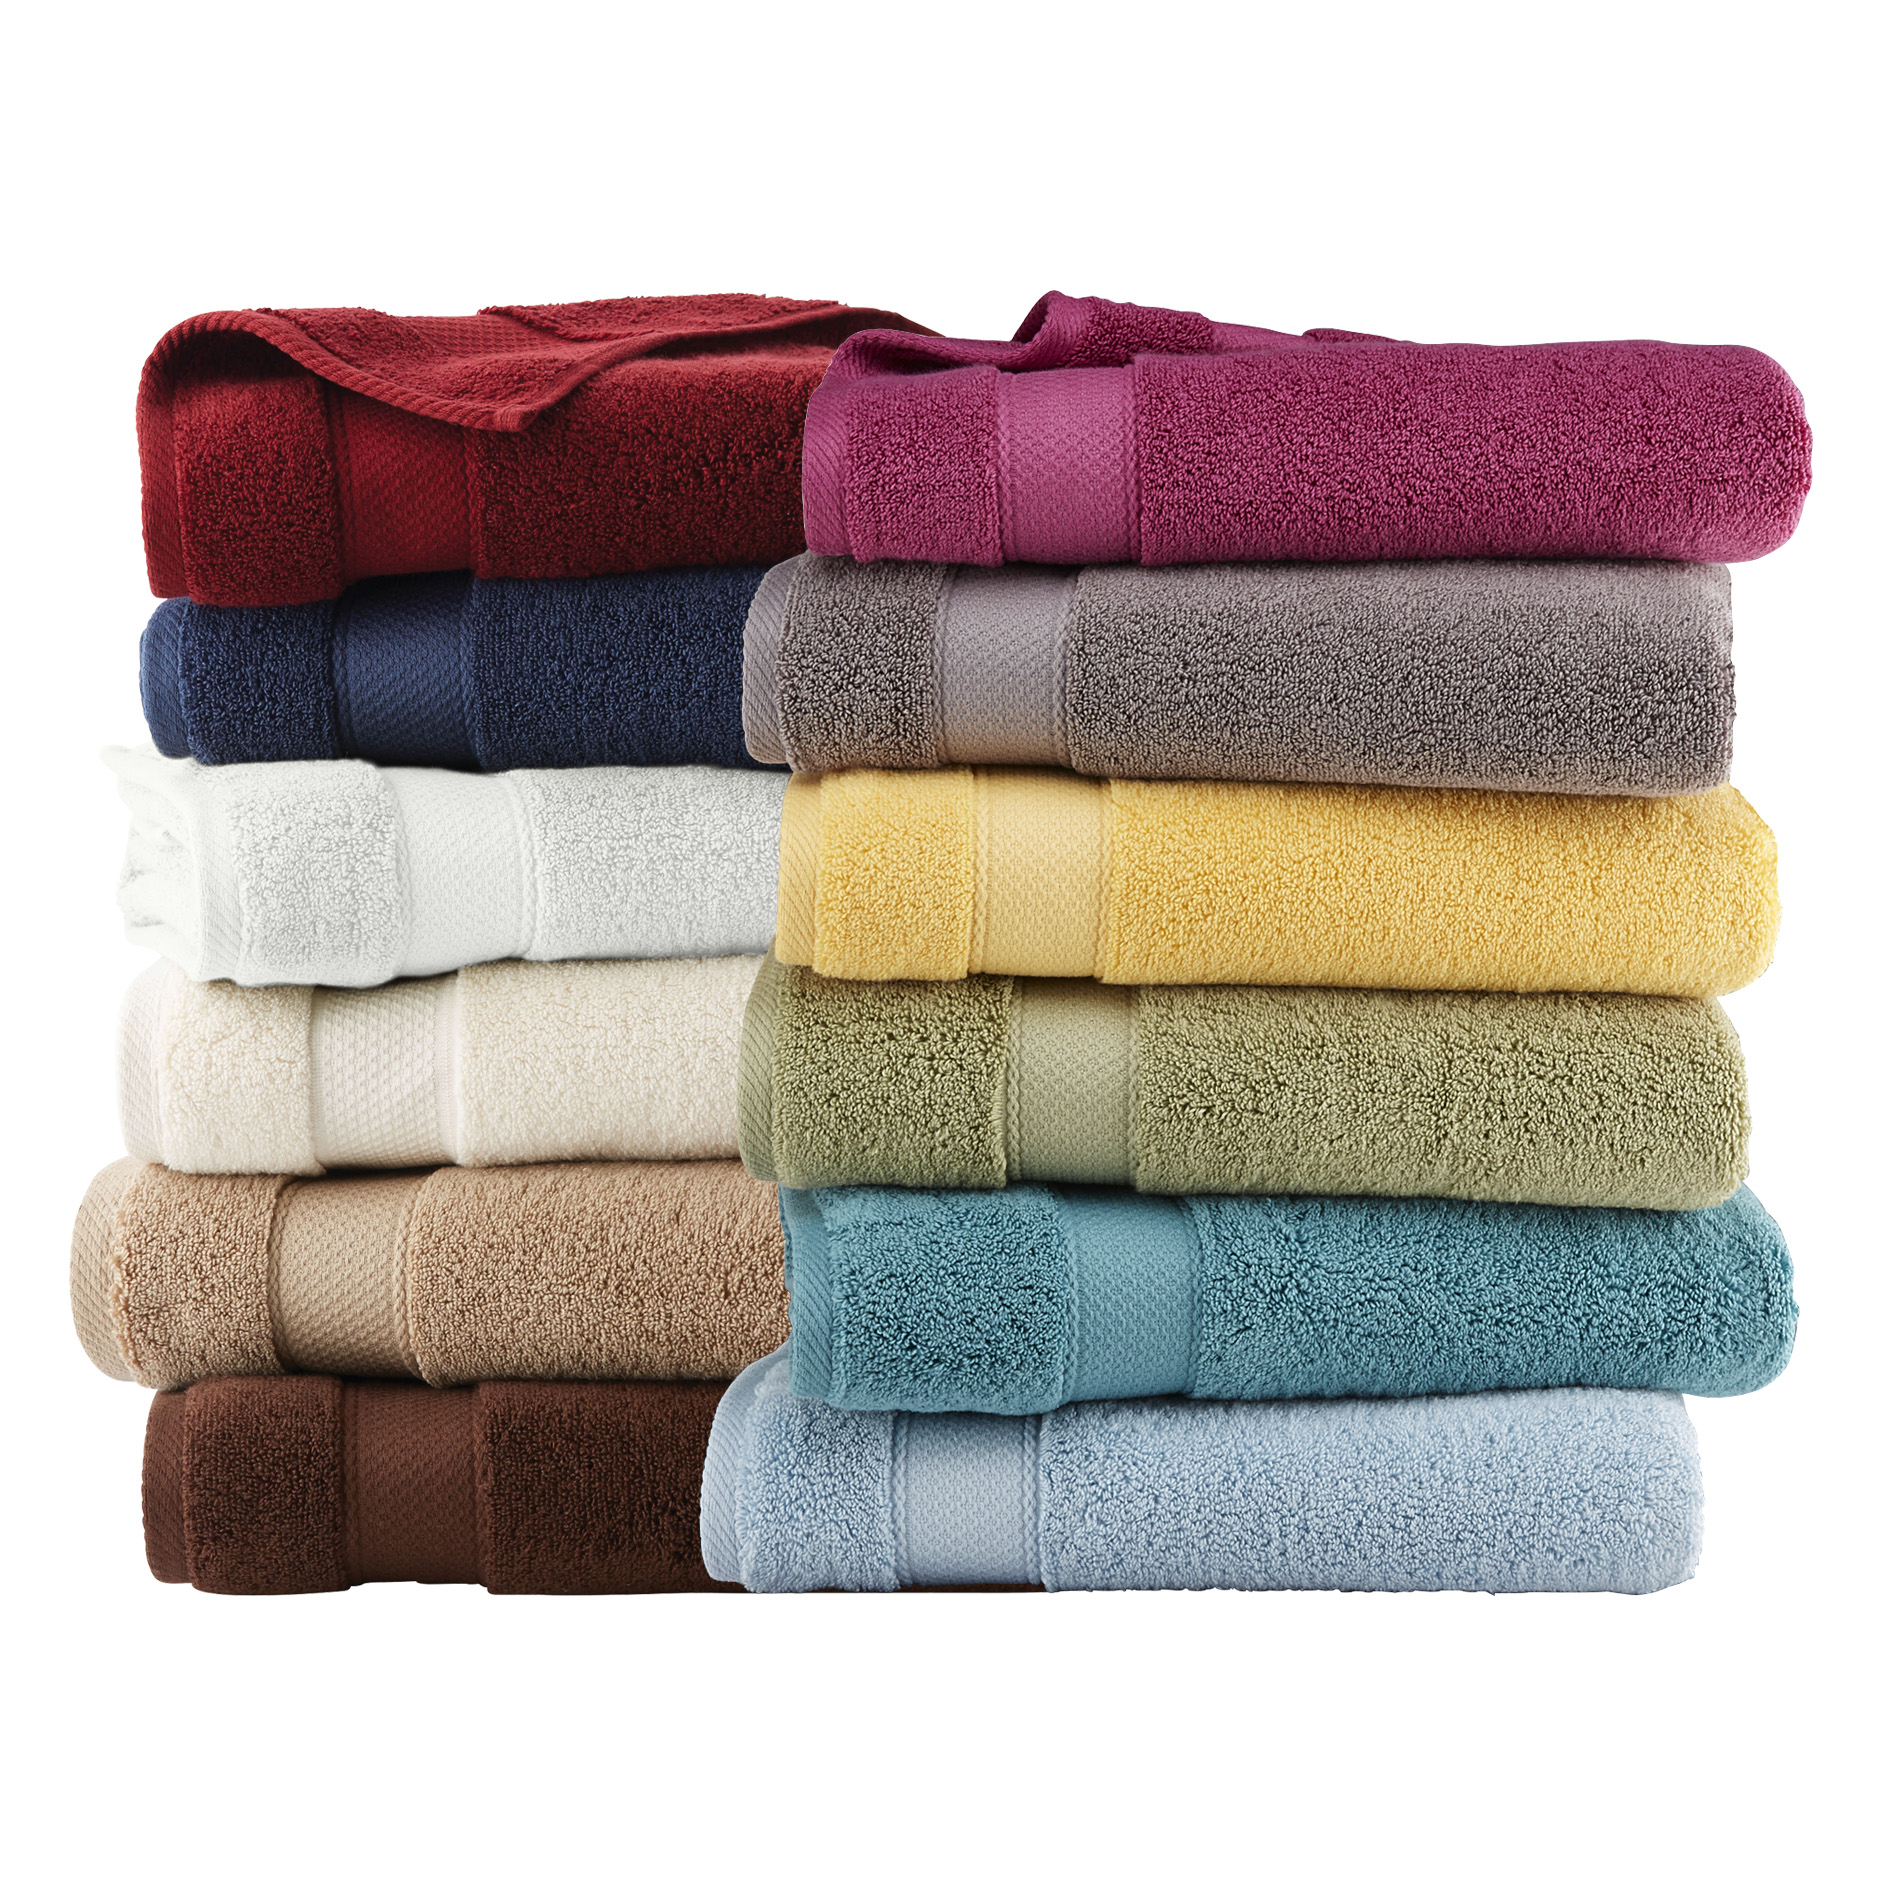 Egyptian Cotton Bath Towels  Bath Sheets Hand Towels or Washcloths